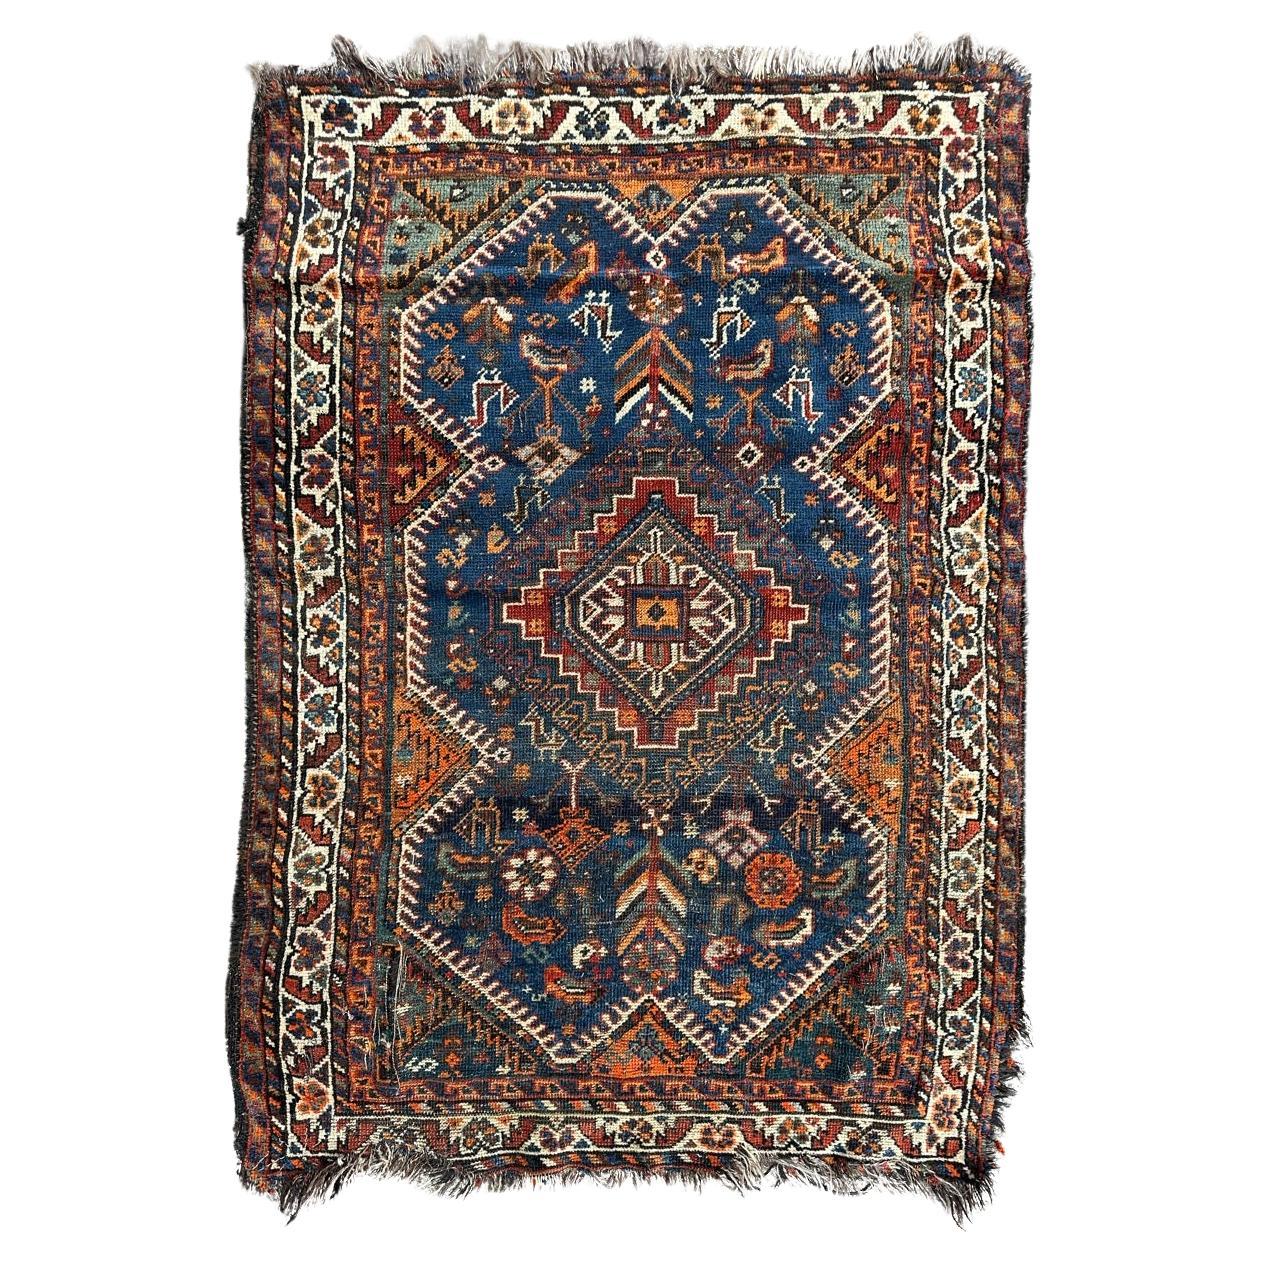 Bobyrug’s nice distressed antique tribal Shiraz rug